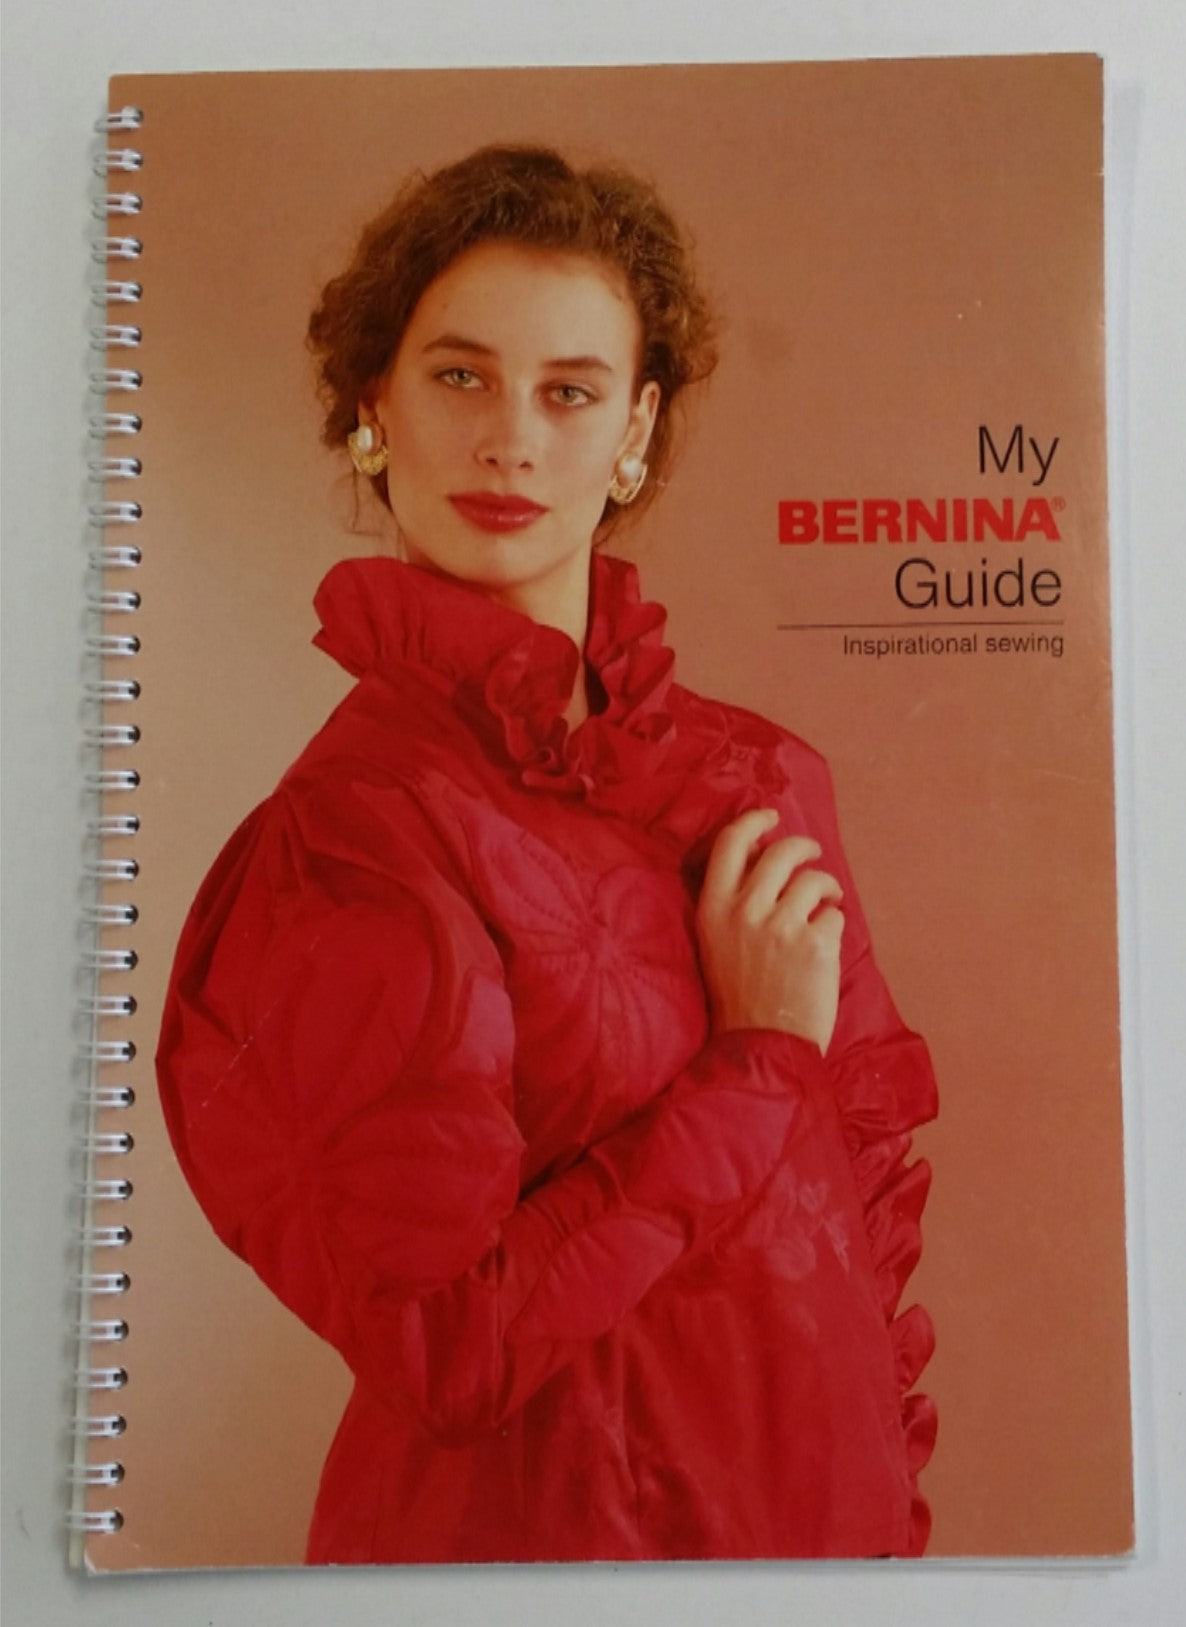 Bernina Inspirational Sewing Guide